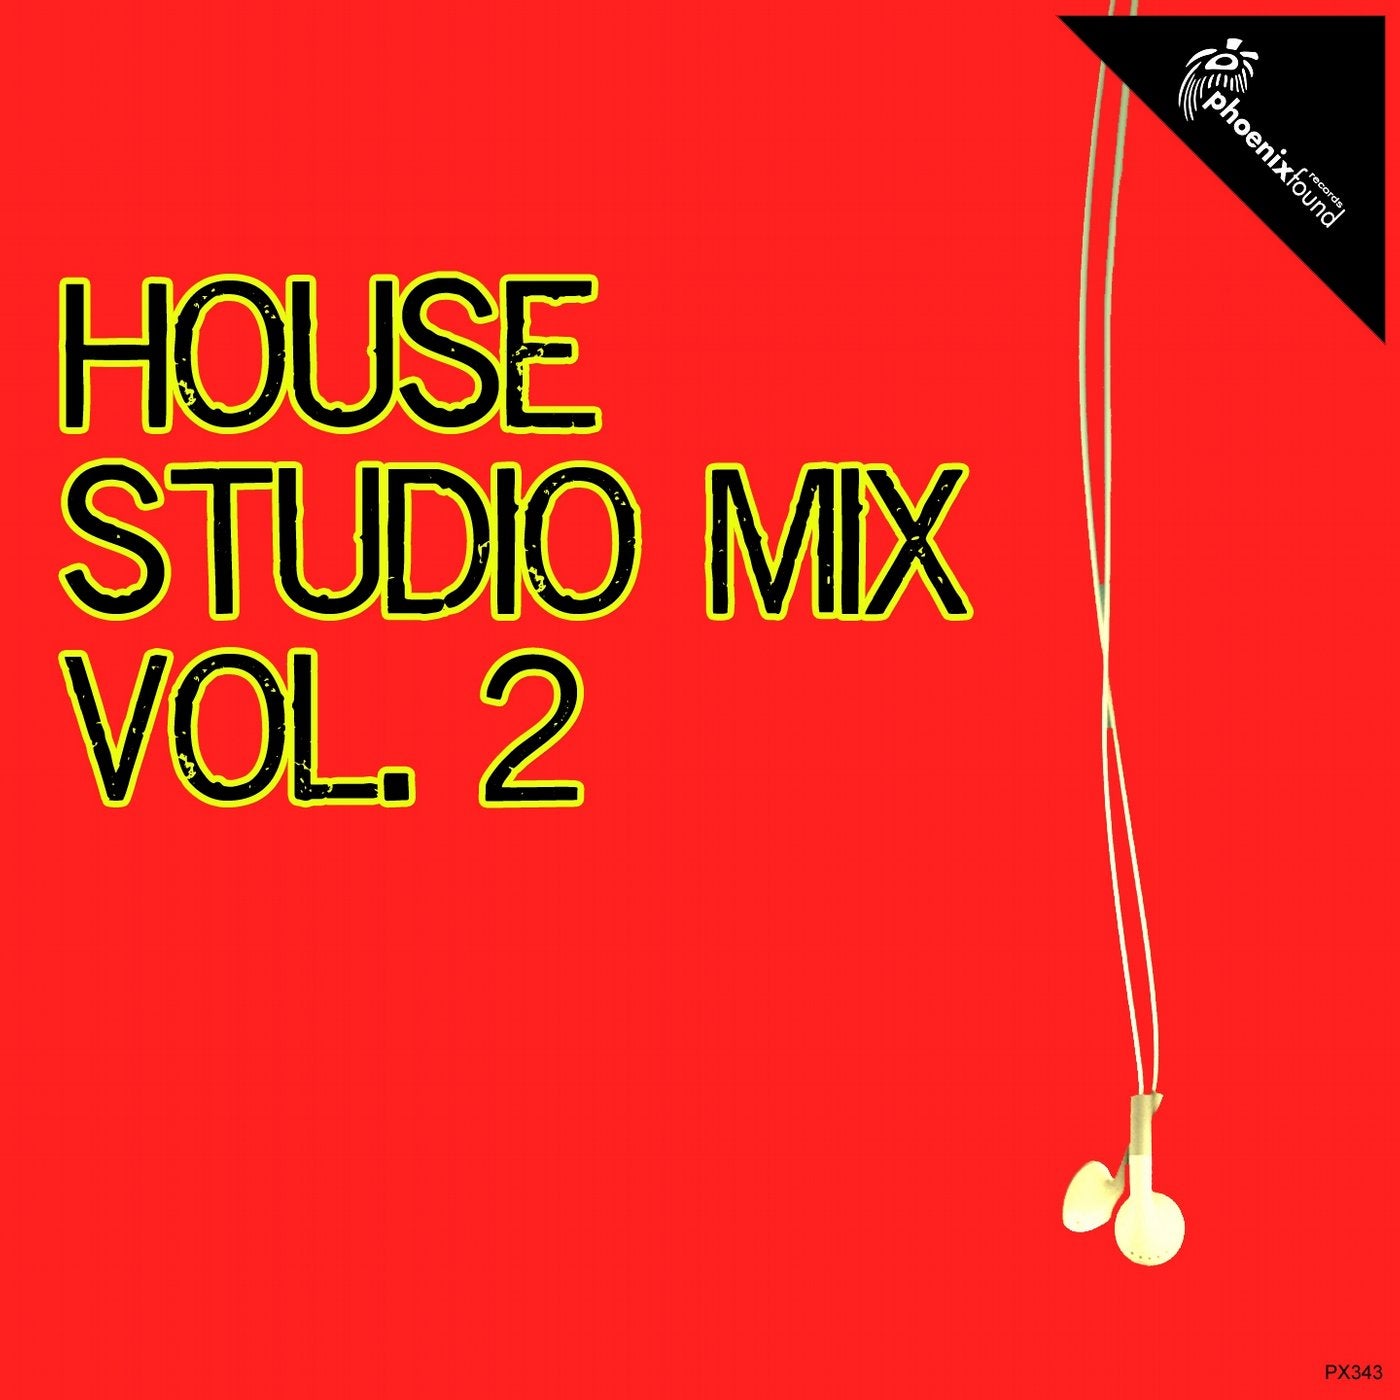 House Studio Mix, Vol. 2